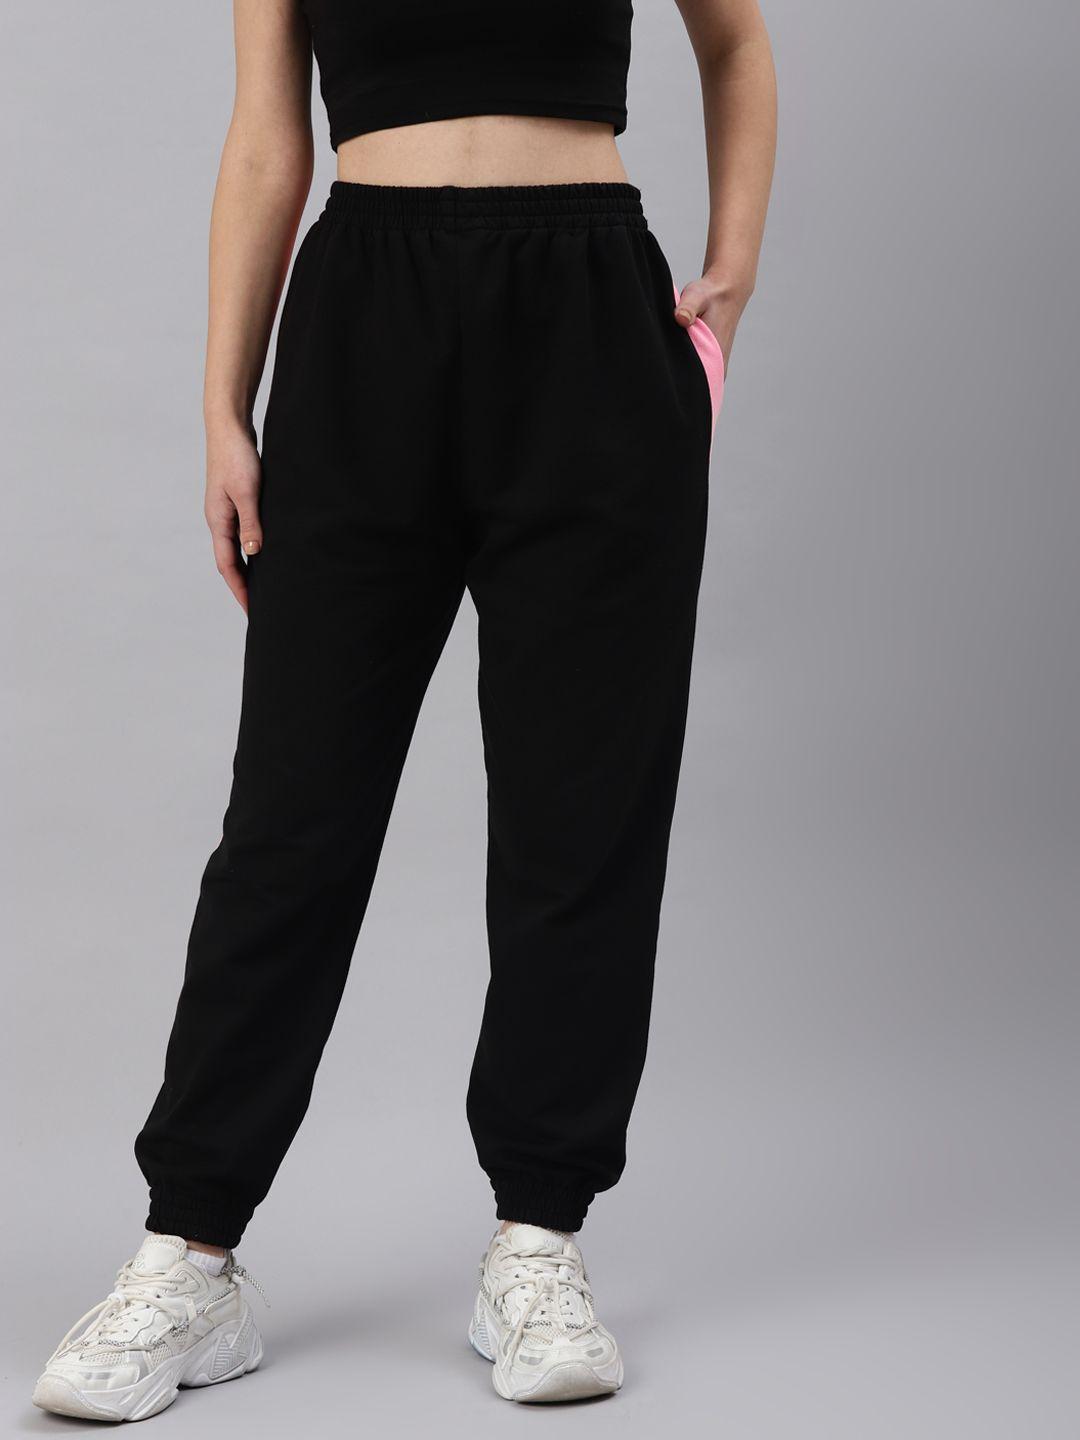 laabha women black & pink regular fit stylish jogger track pants